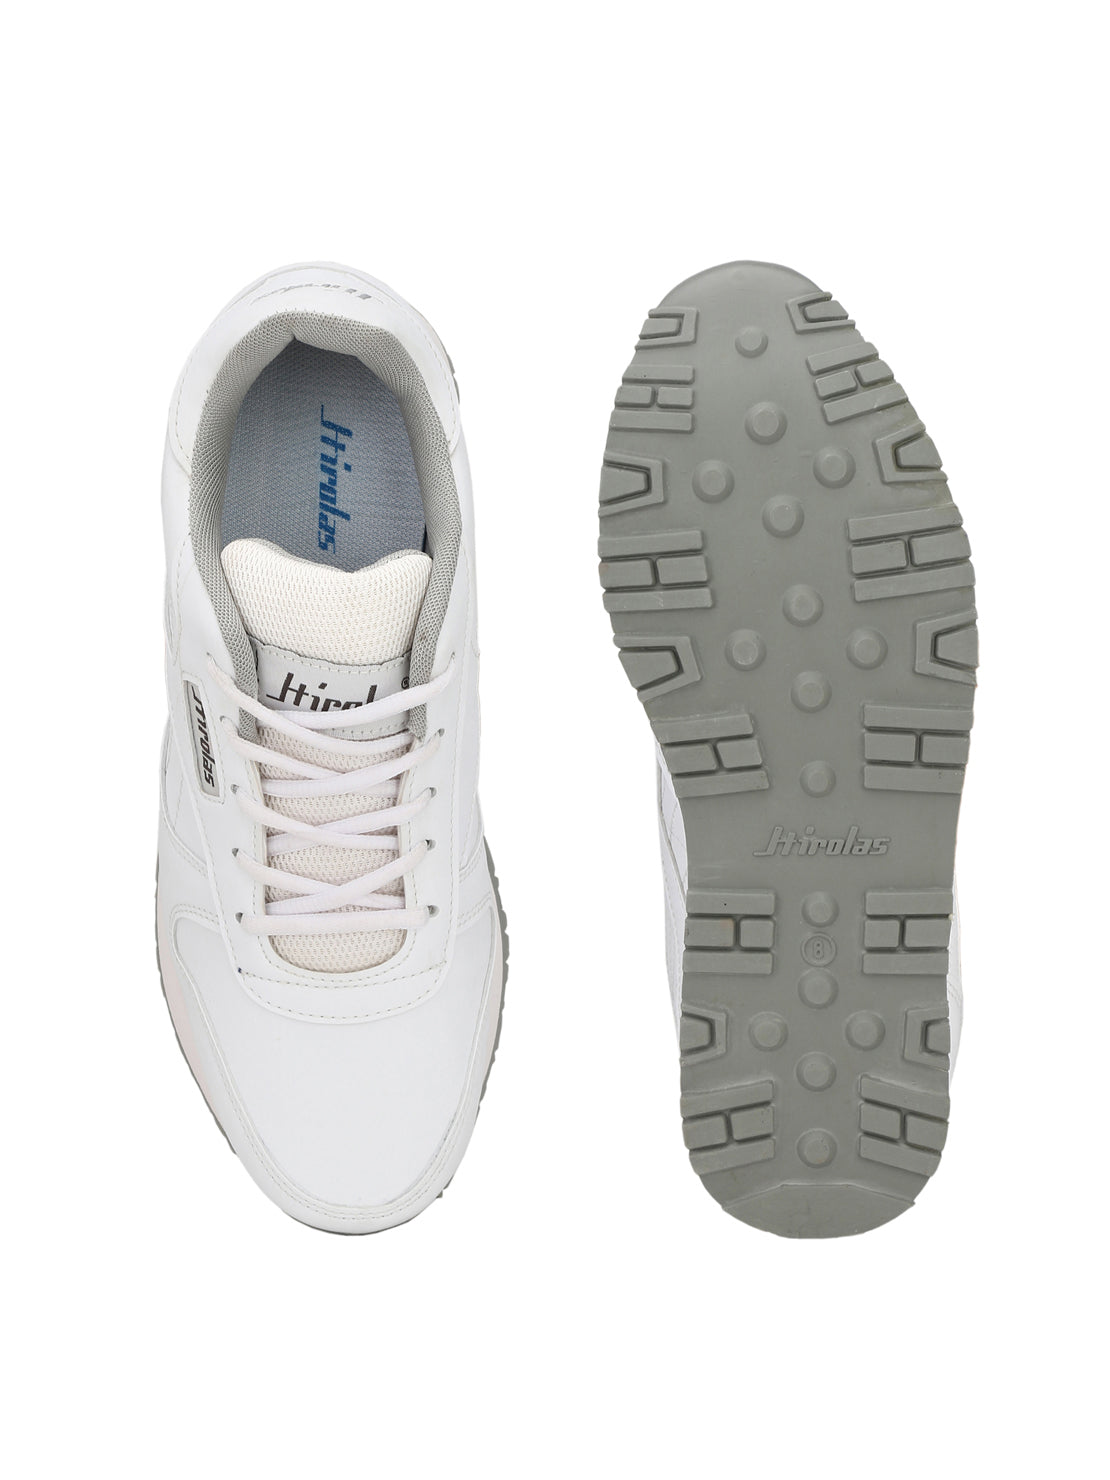 Hirolas® Men's White Multisports Lace Up Sneaker Sport Shoes (HRL1801W)